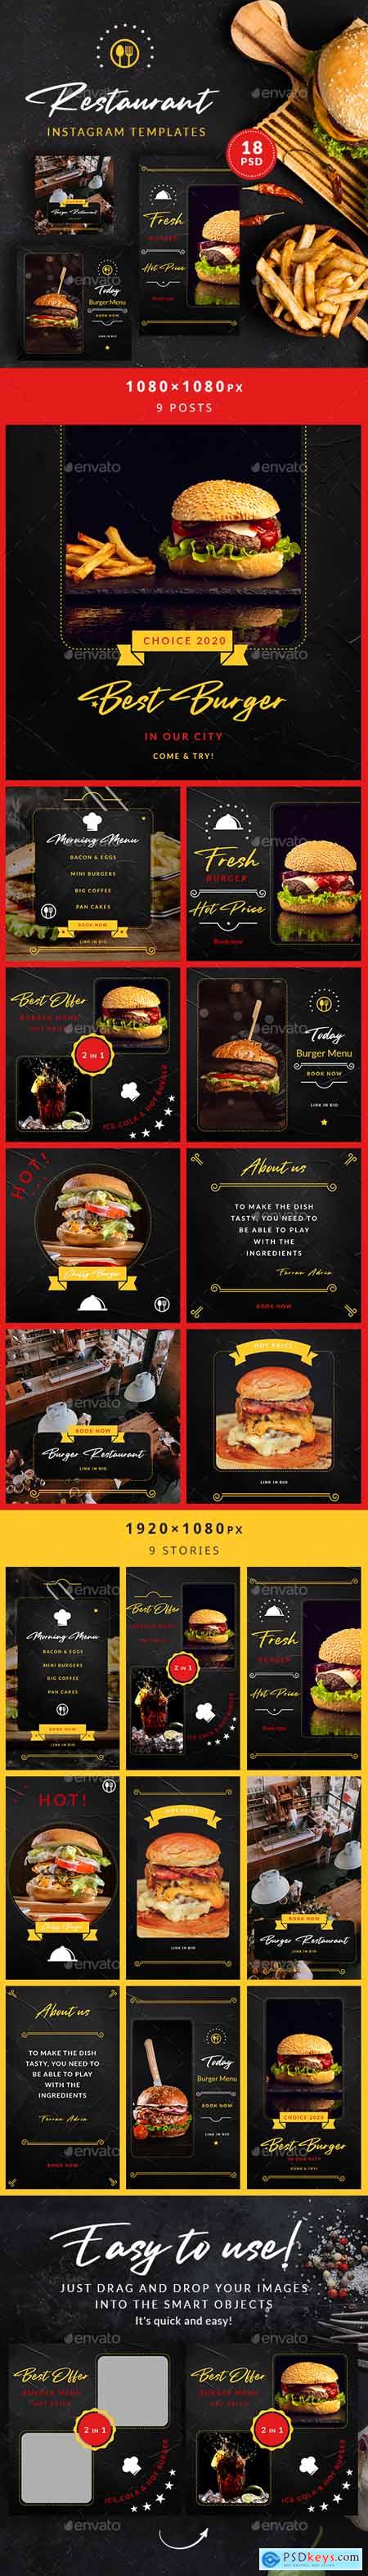 Burger Restaurant Instagram Posts&Stories 26312636